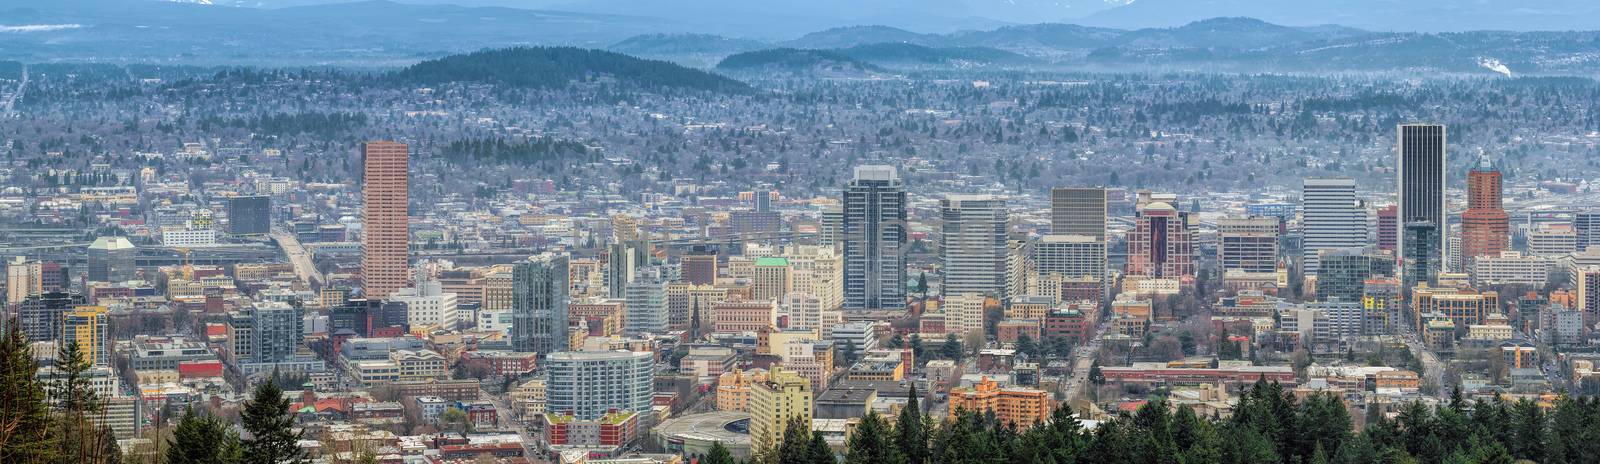 Portland Oregon Cityscape Panorama by jpldesigns